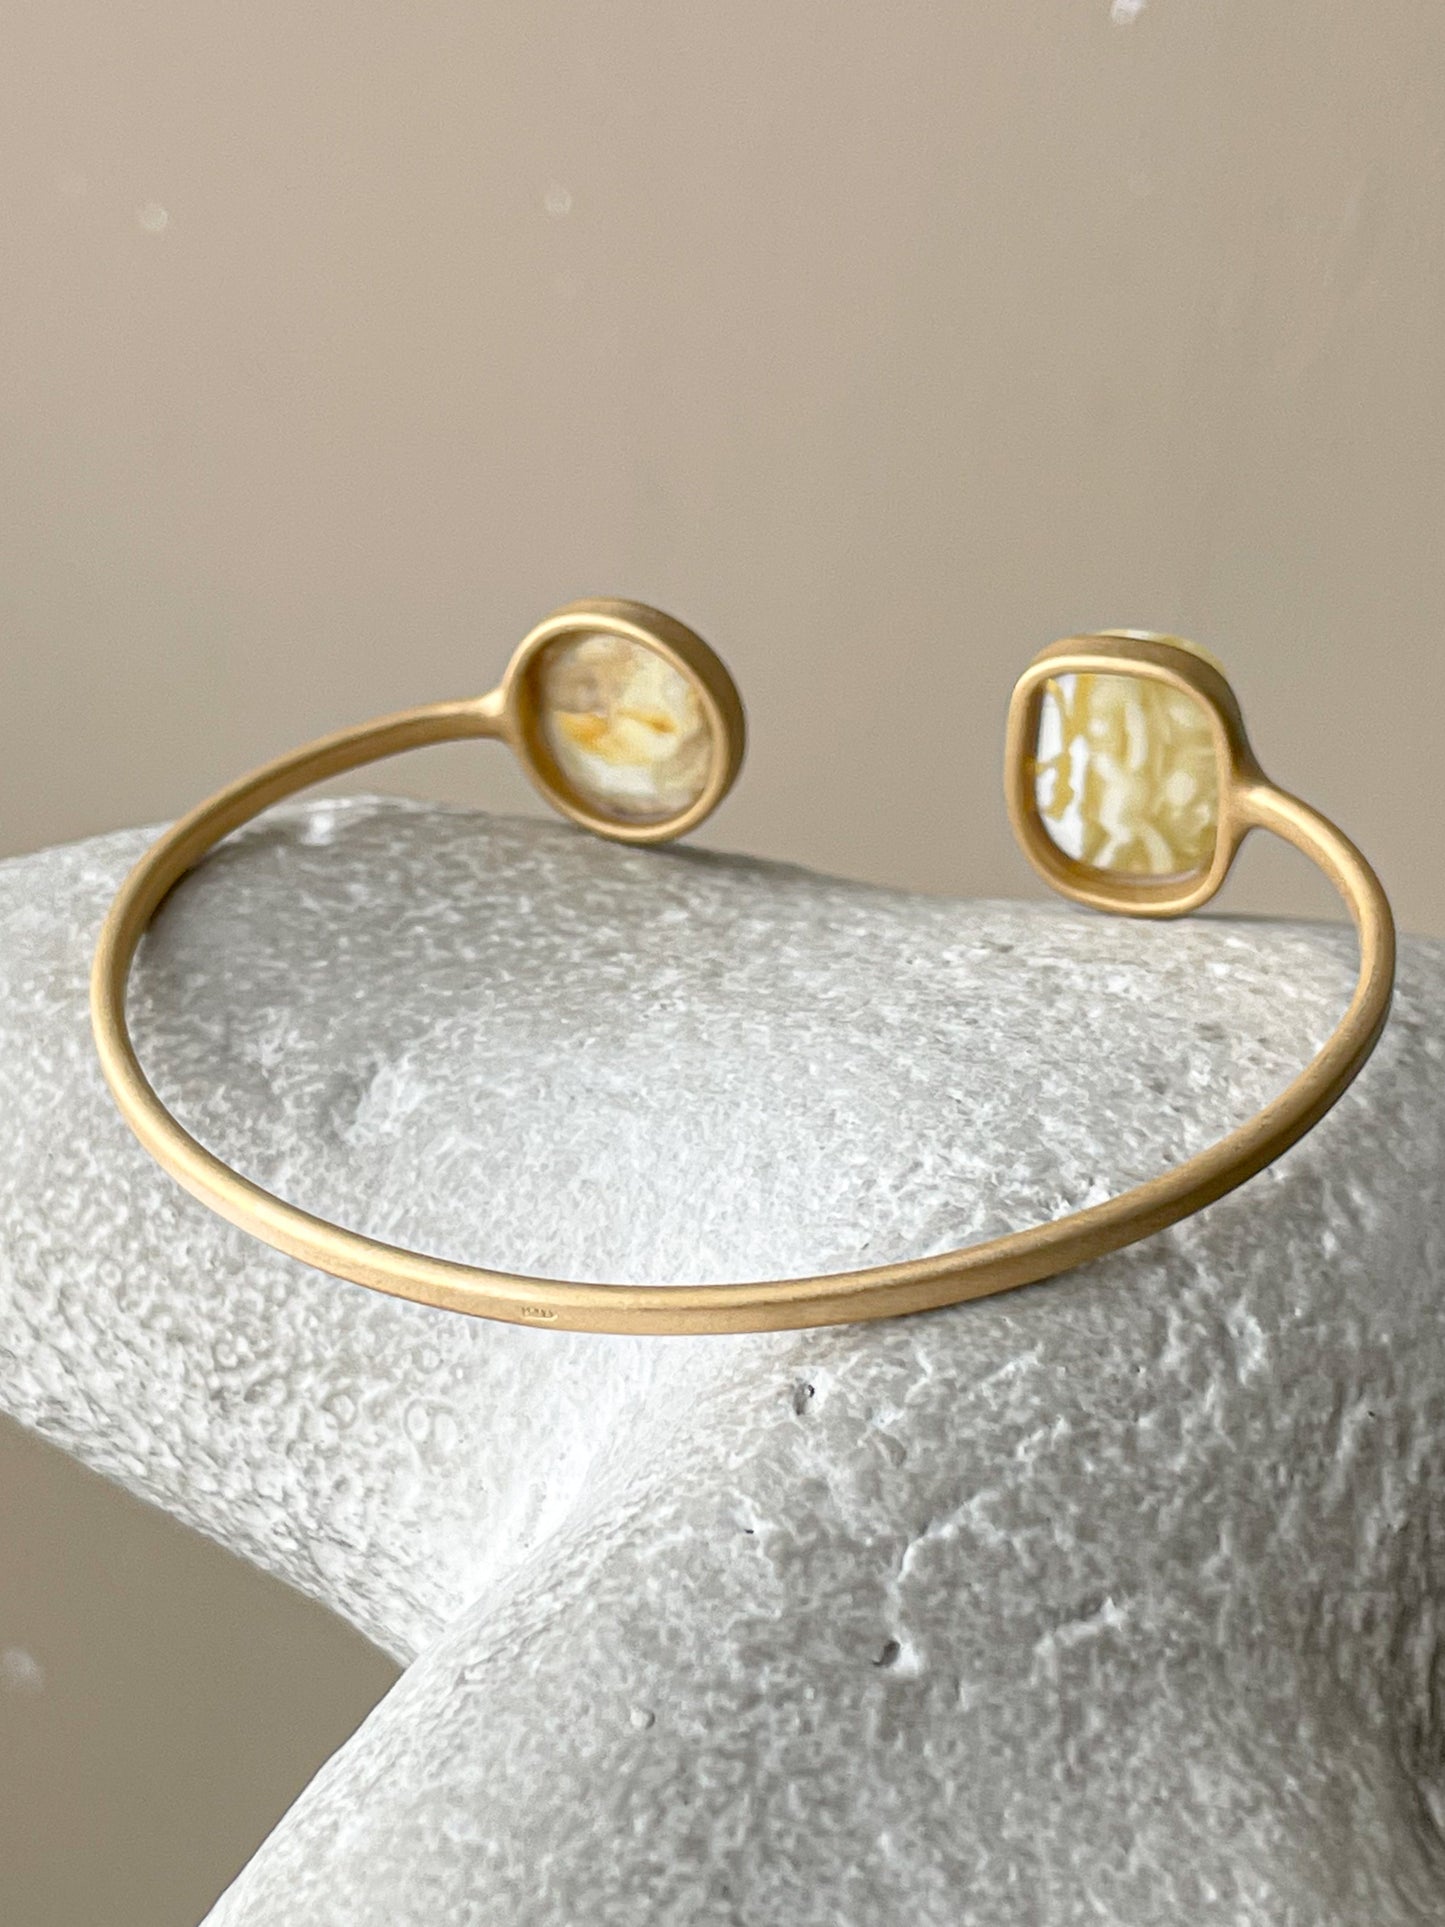 Amber bracelet - Gold plated silver - Cuff bracelet collection - Size 7